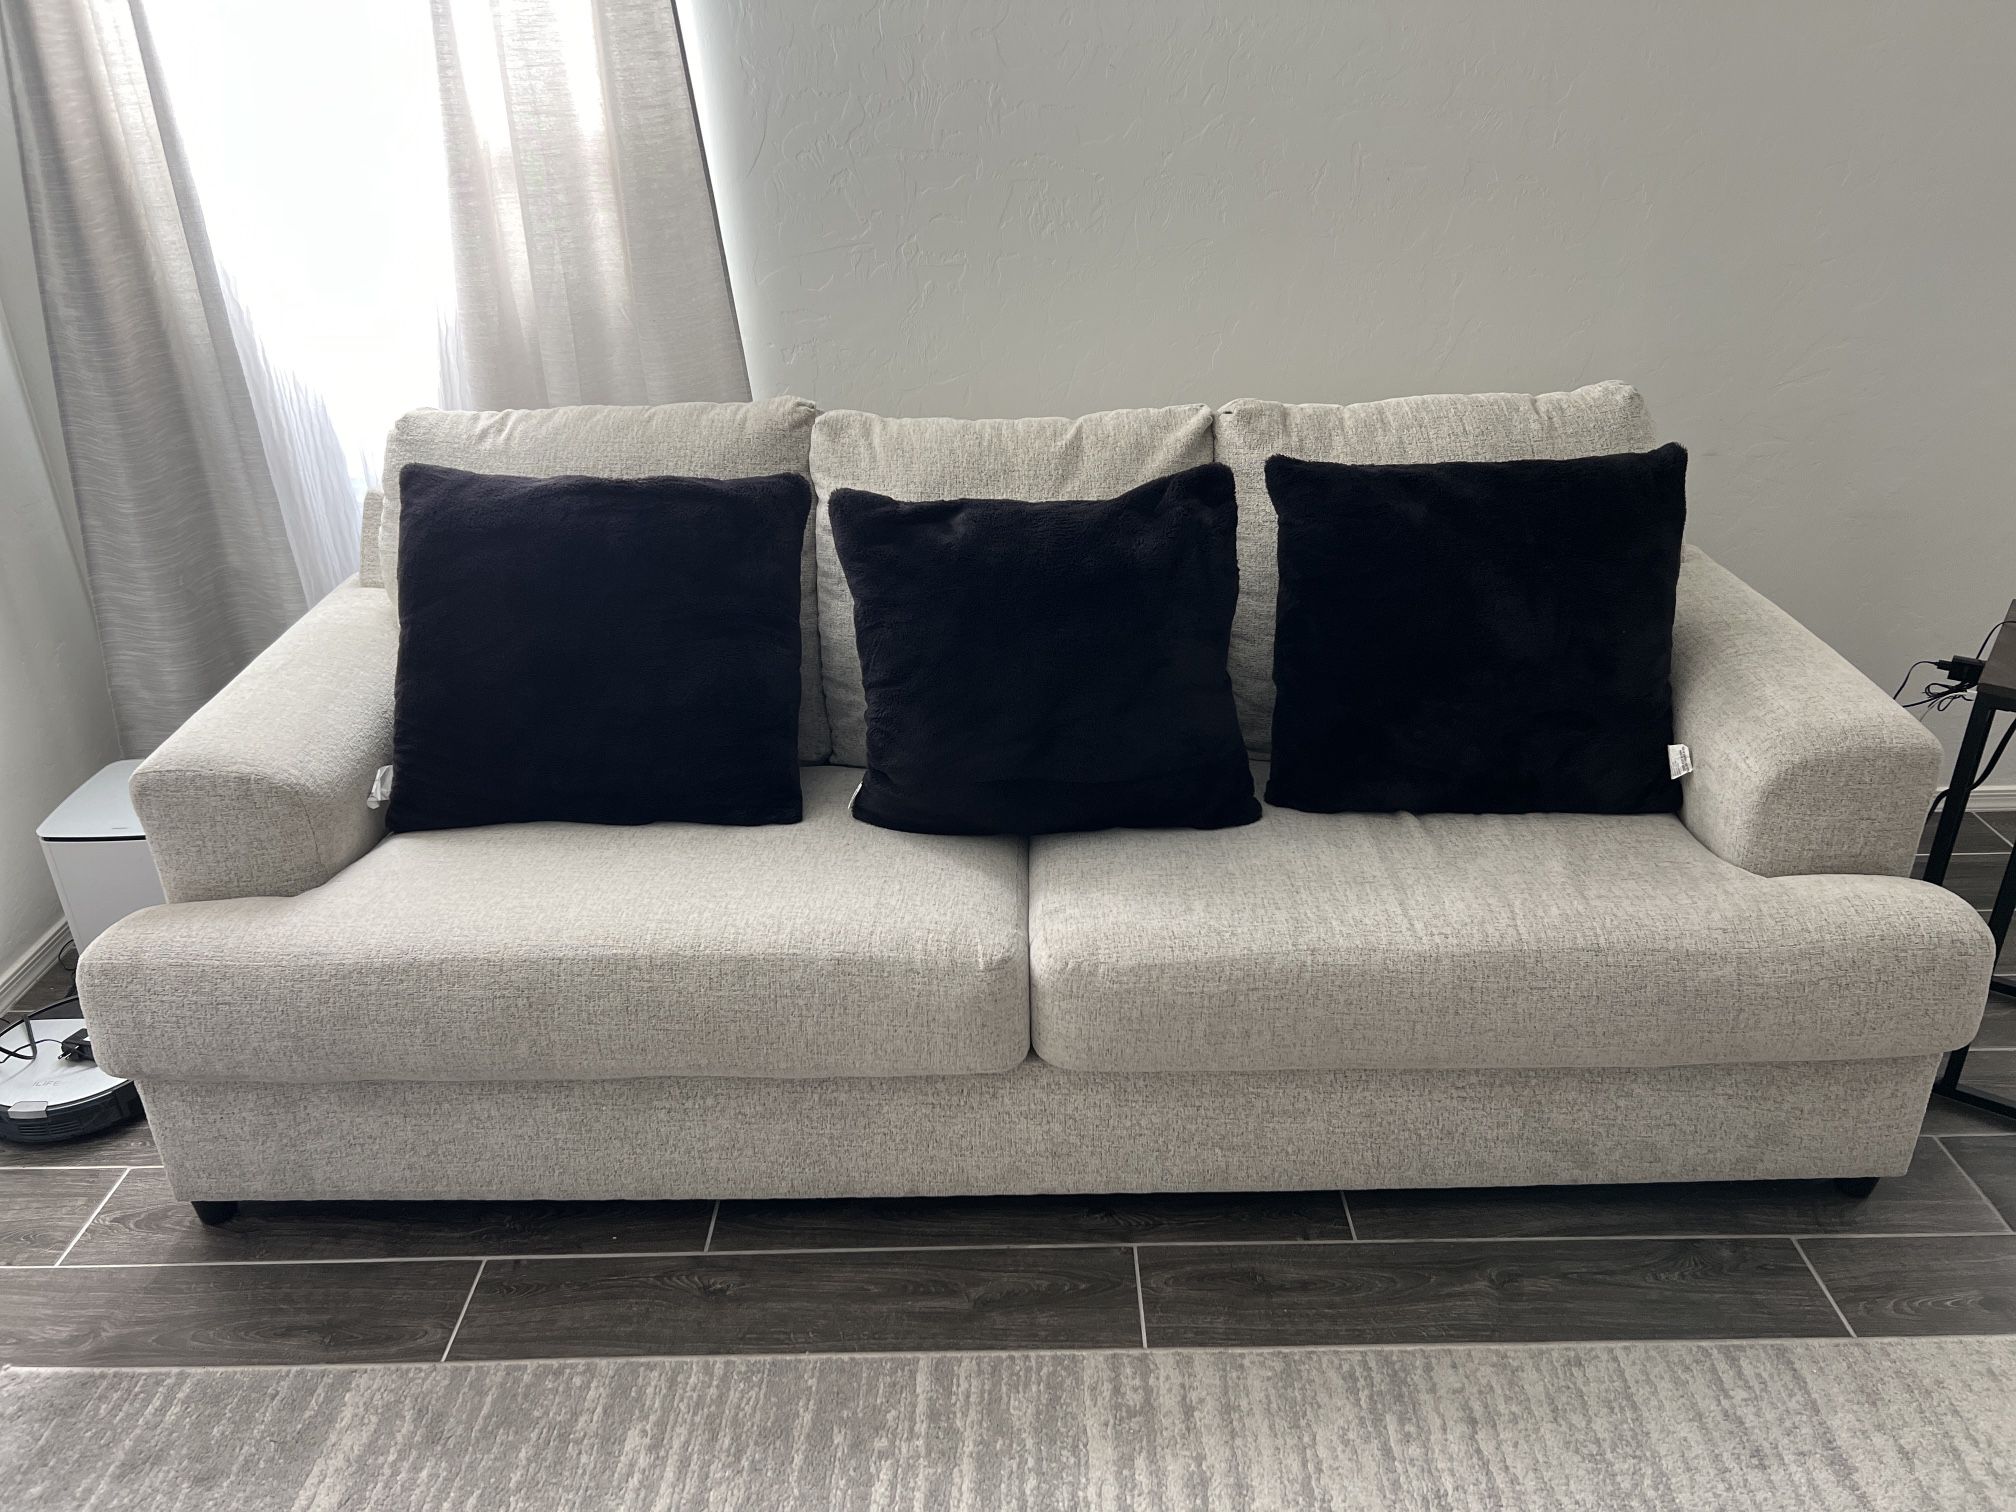 Couch, Sofa, Ottoman